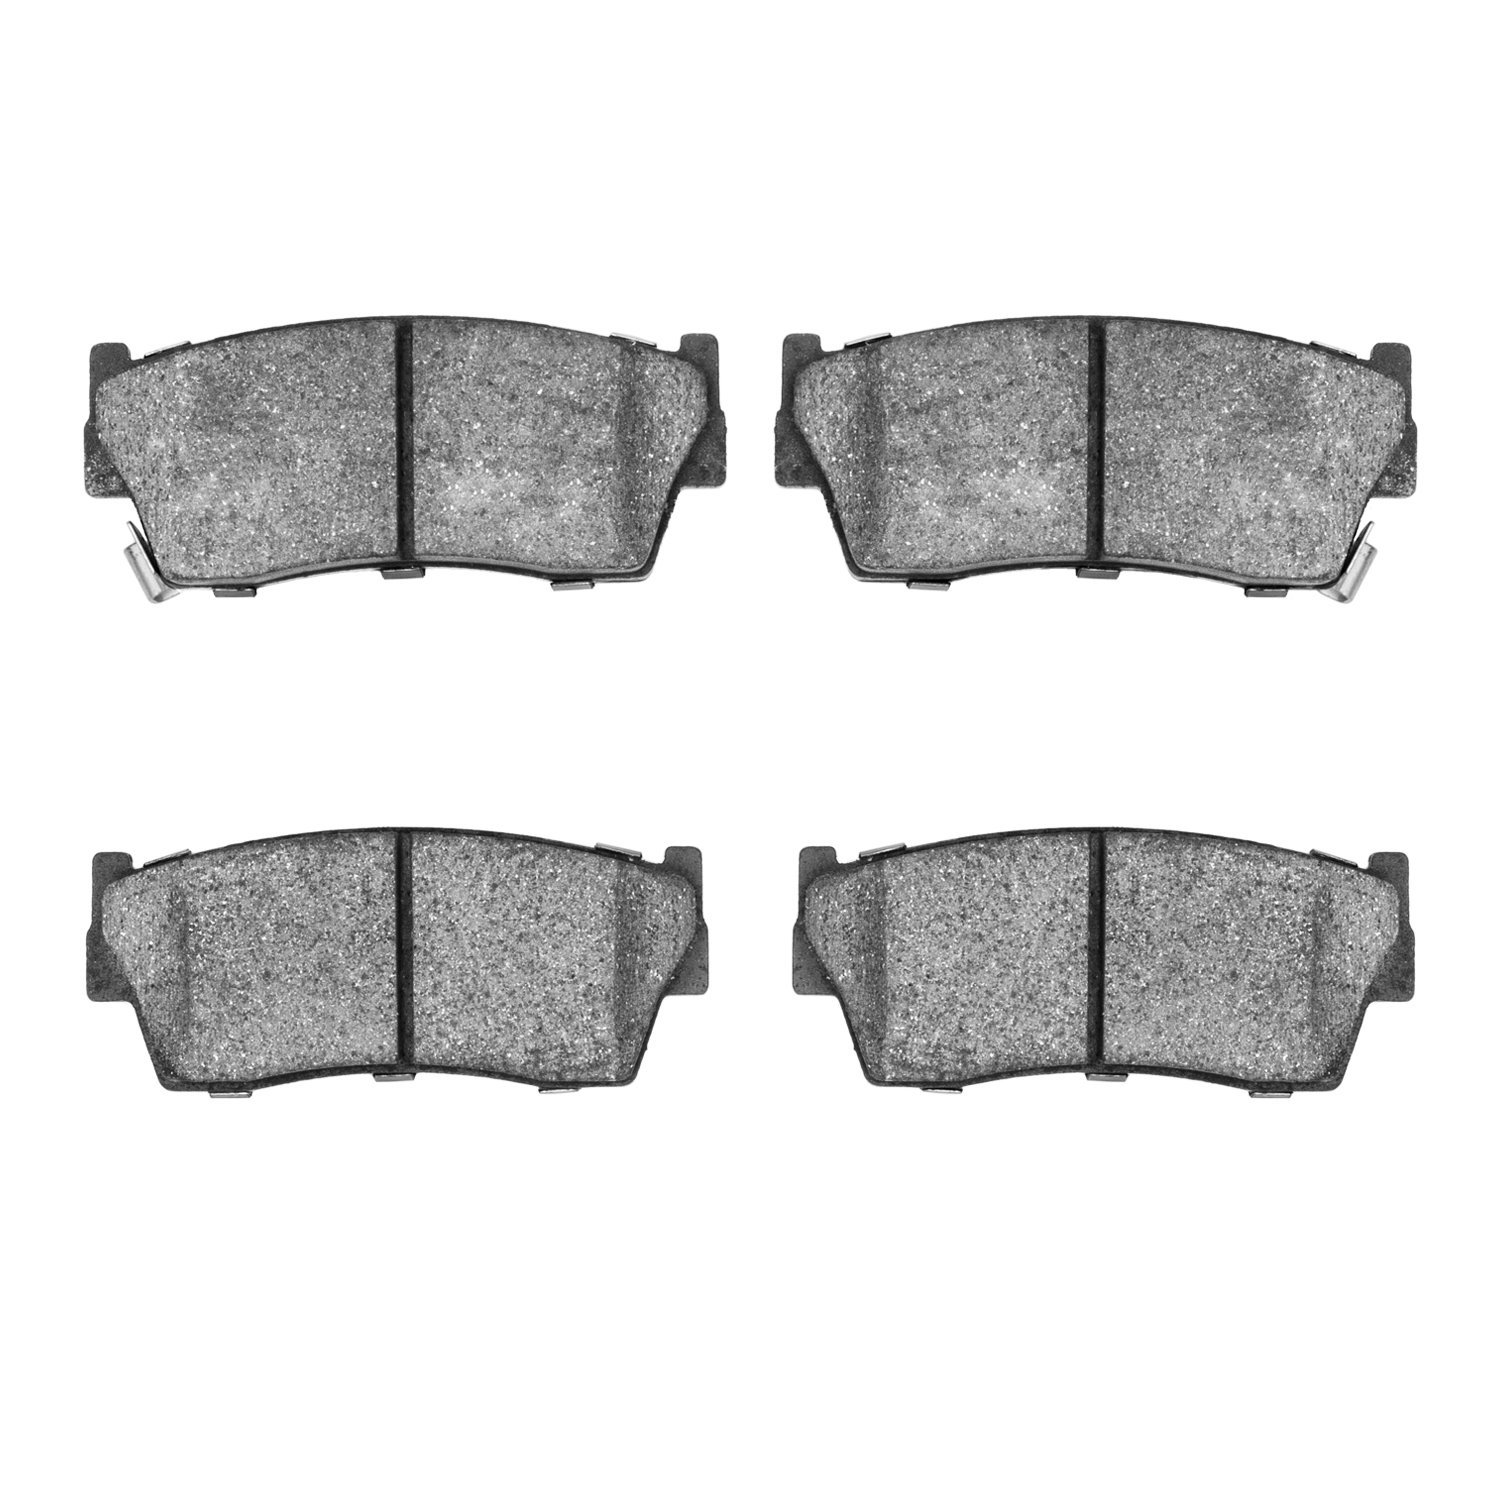 Semi-Metallic Brake Pads, 1989-1998 Fits Multiple Makes/Models, Position: Front